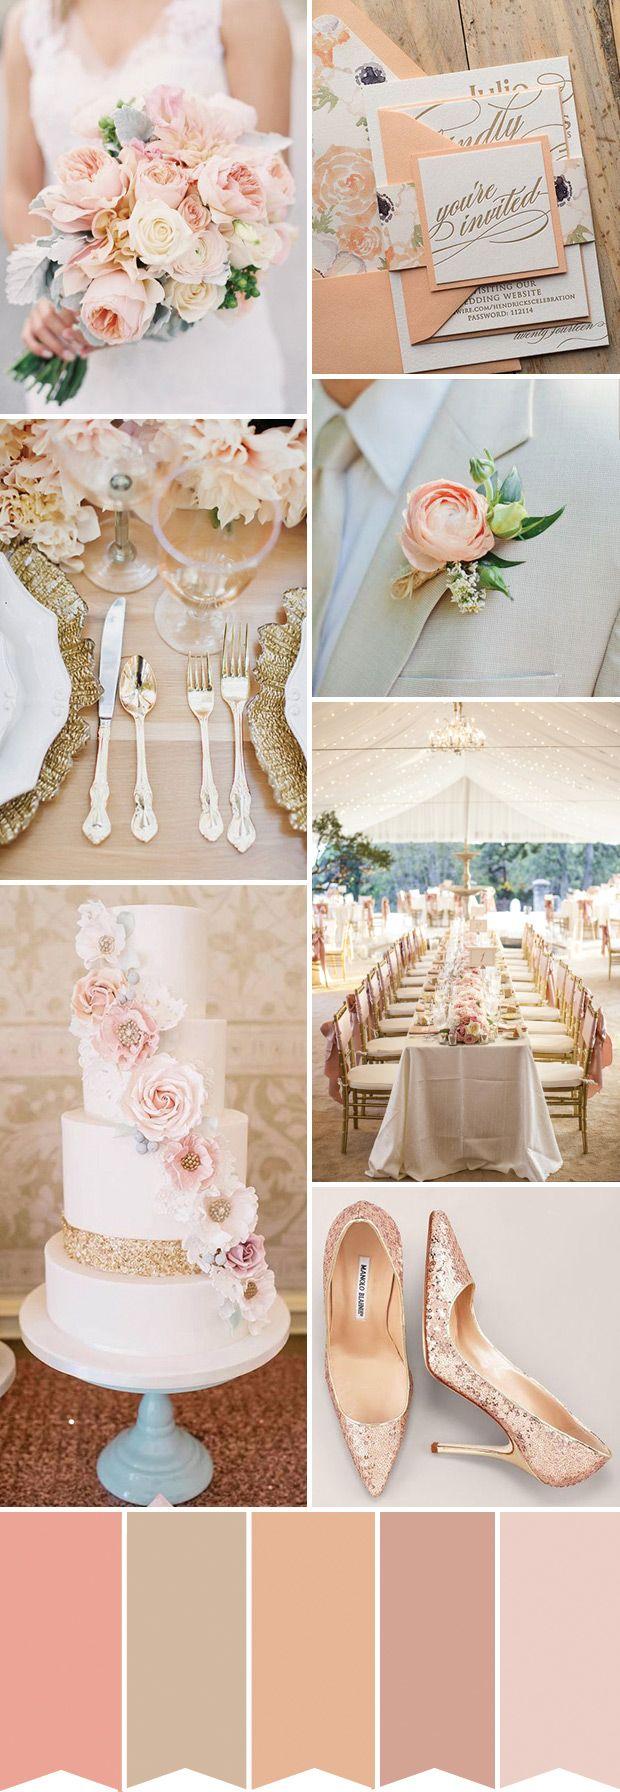 Wedding - Peach Bellini - A Sparkling Peach And Gold Wedding Palette